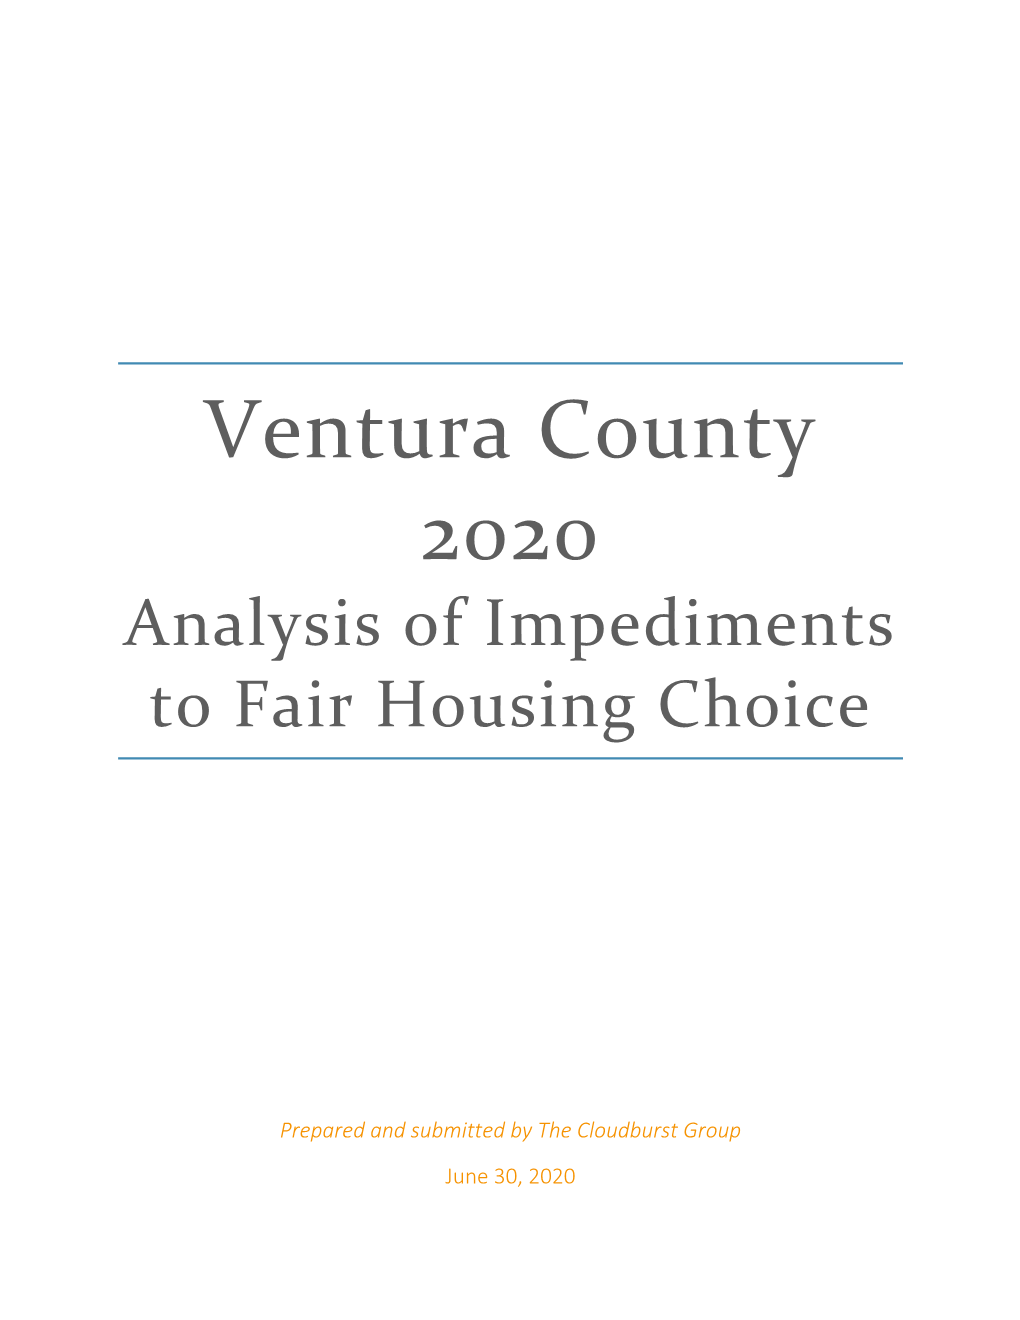 Ventura County 2020 Analysis of Impediments to Fair Housing Choice